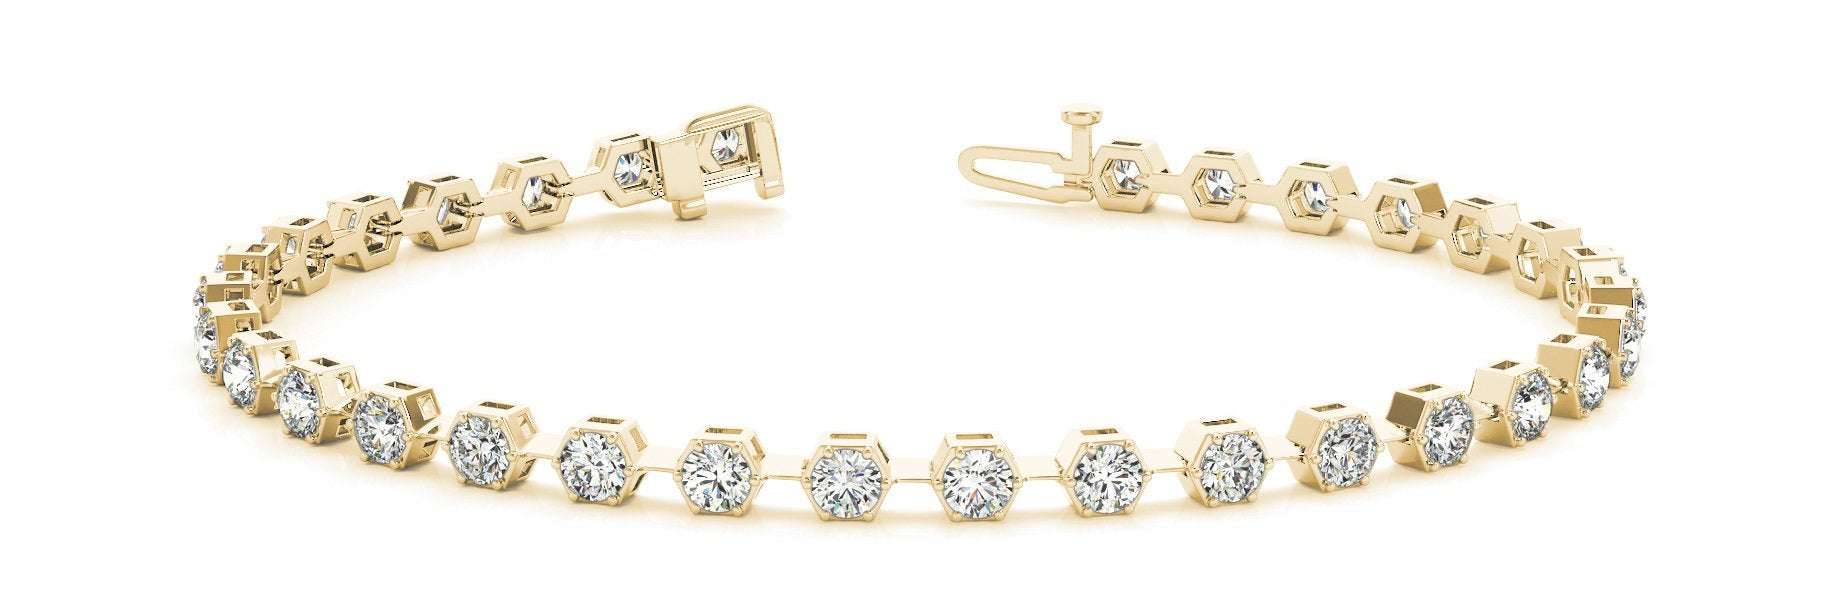 Fancy Diamond Bracelet Ladies 1.52ct tw - 14kt Gold